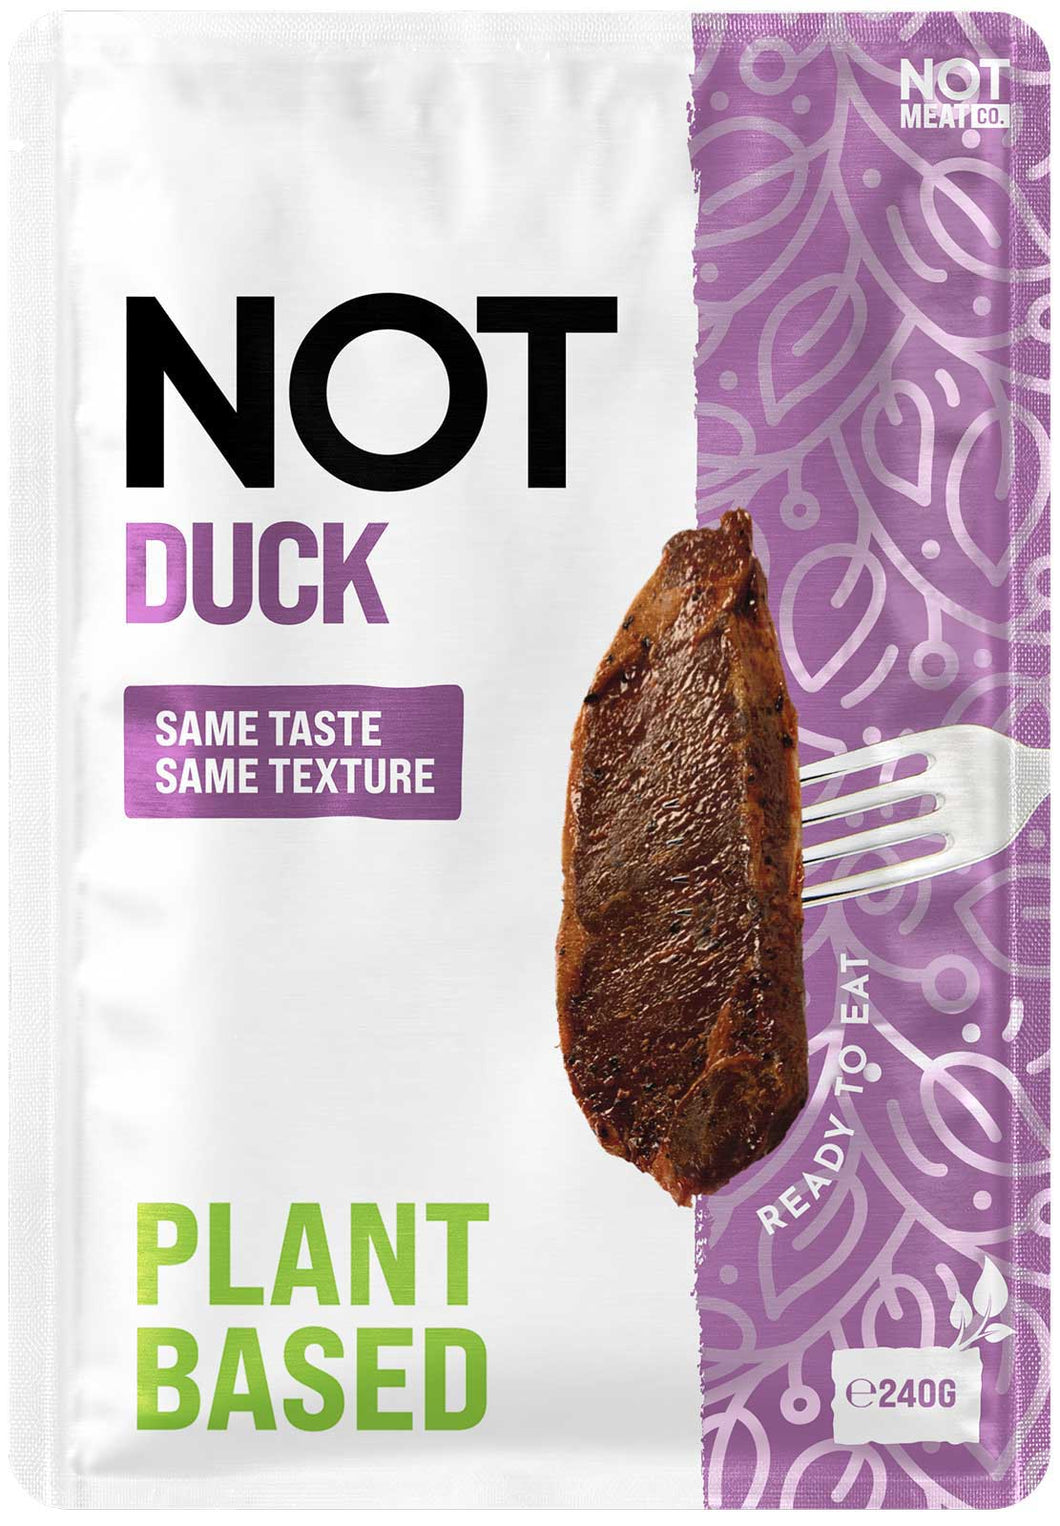 Not Meat Co - Not Duck 240g